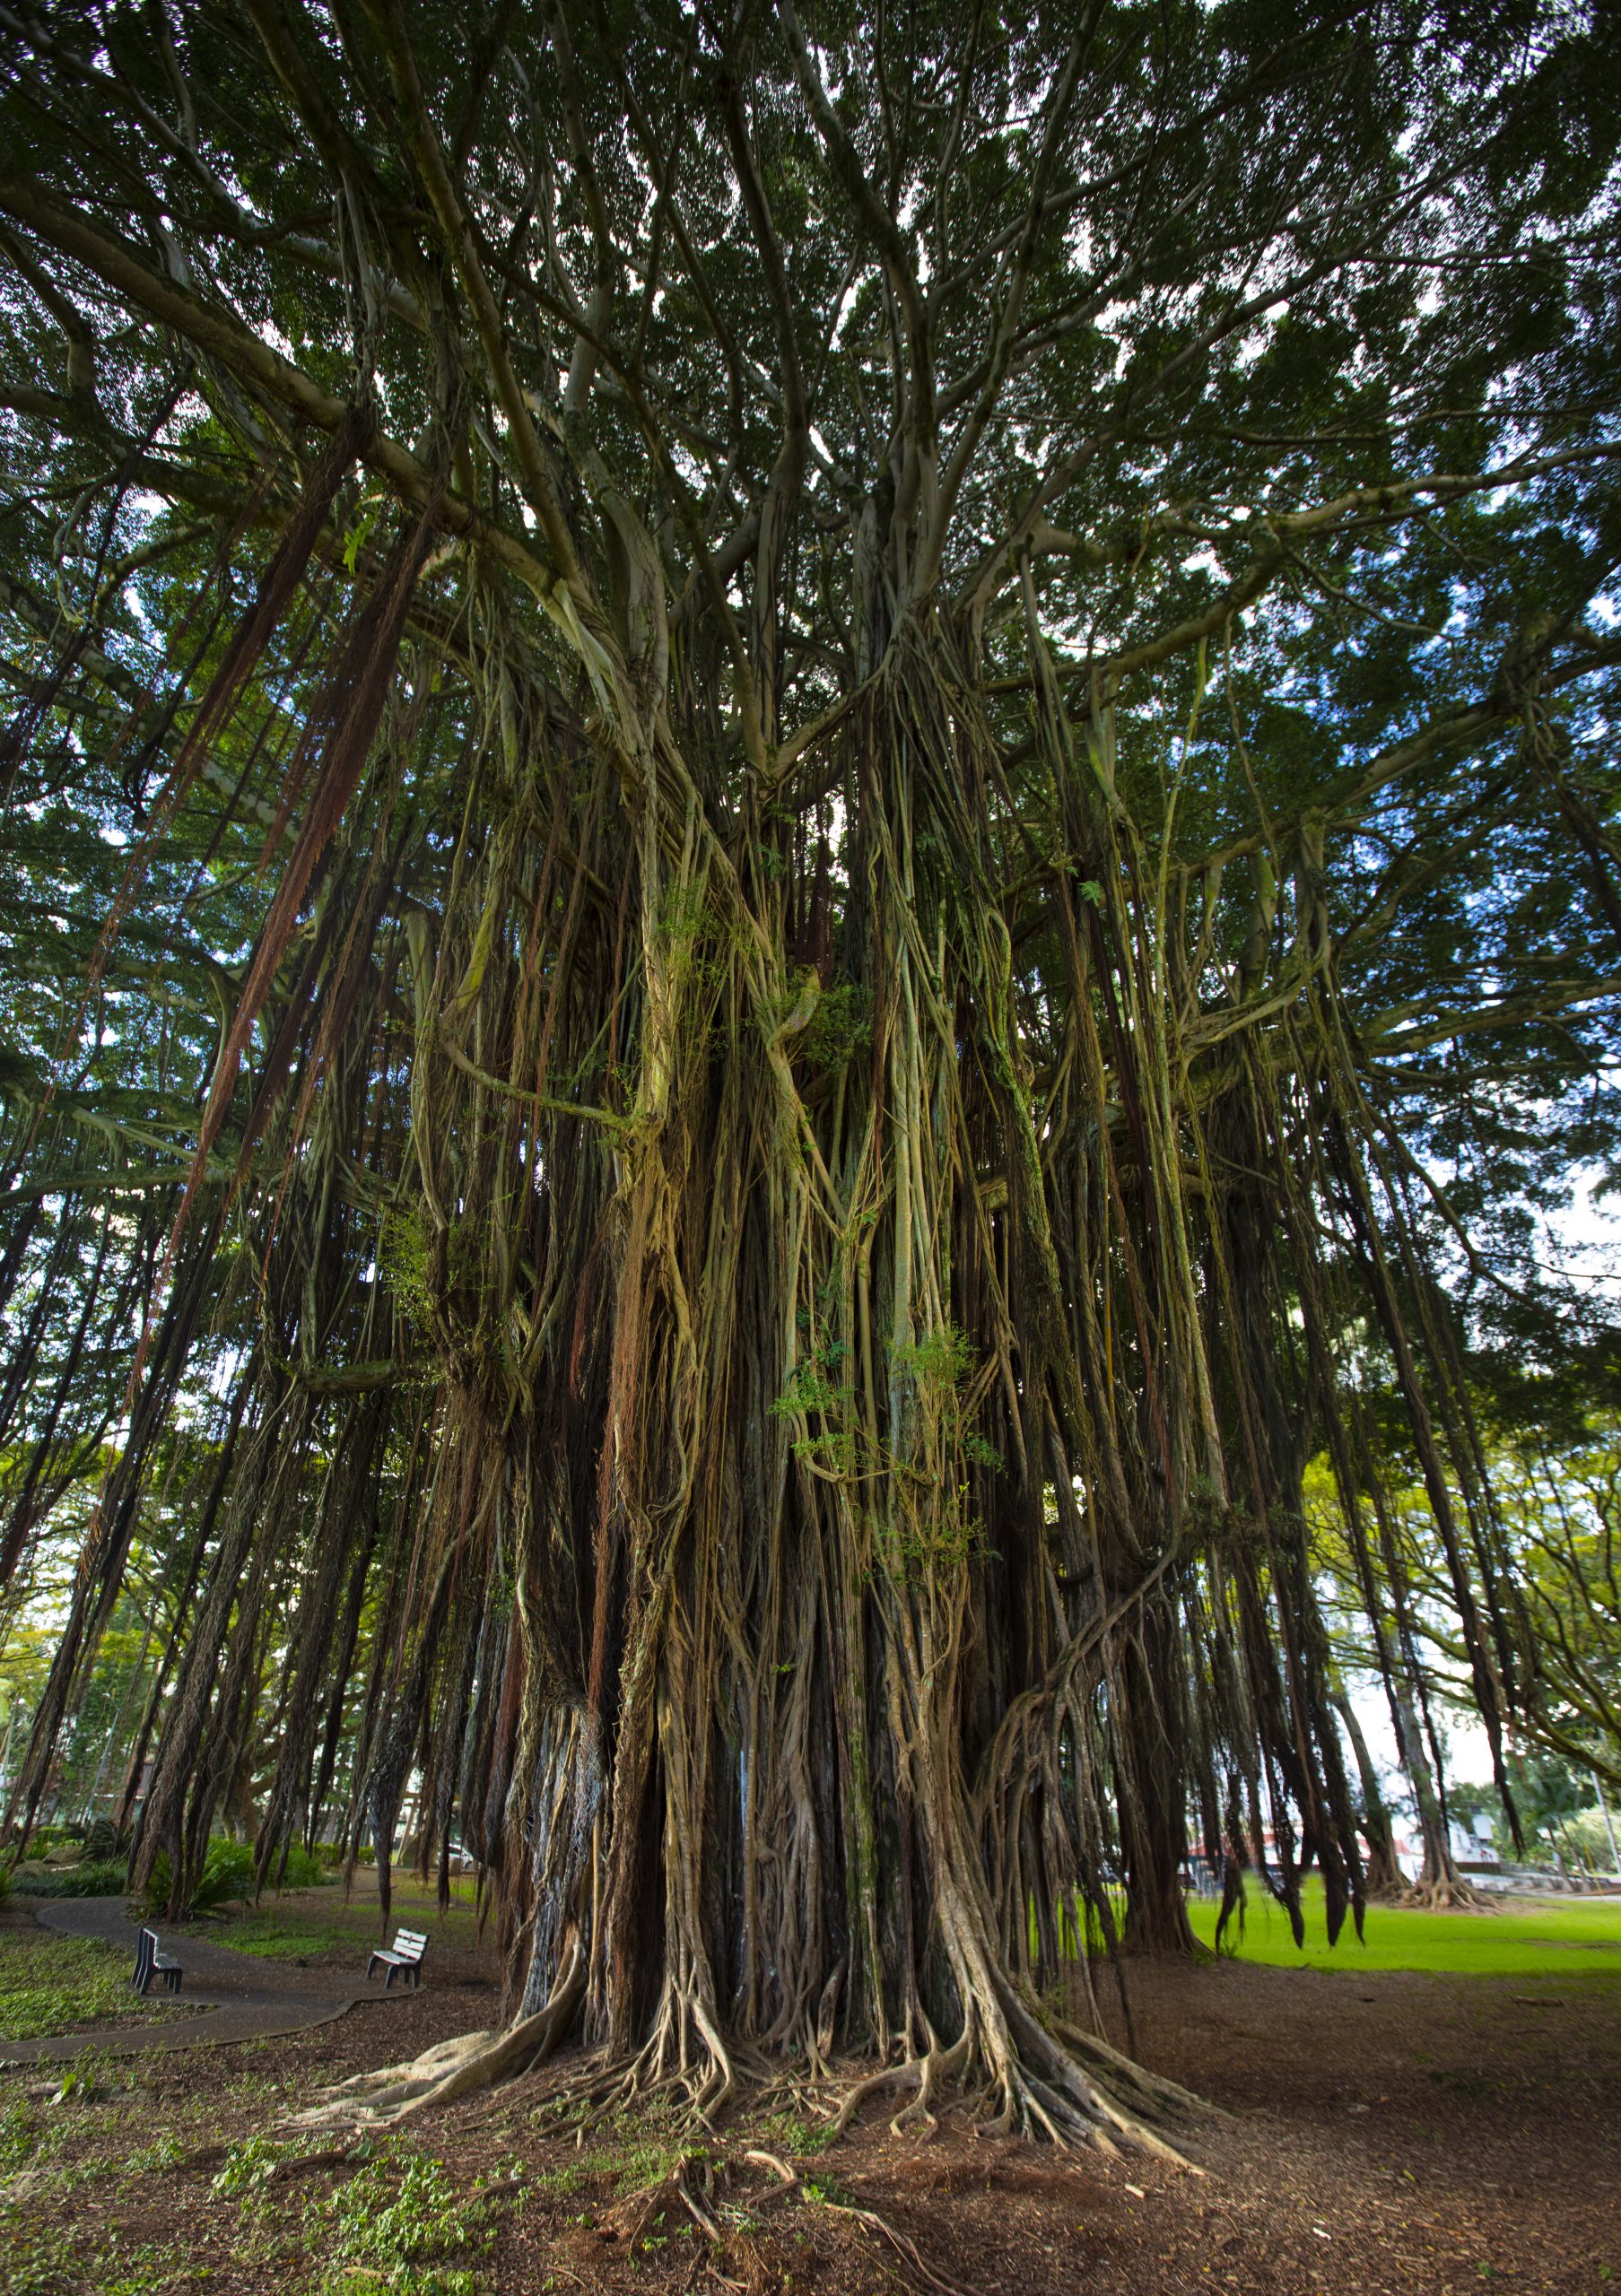 Giant Indian Banyan tree at the Liliʻuokalani Park and Gardens